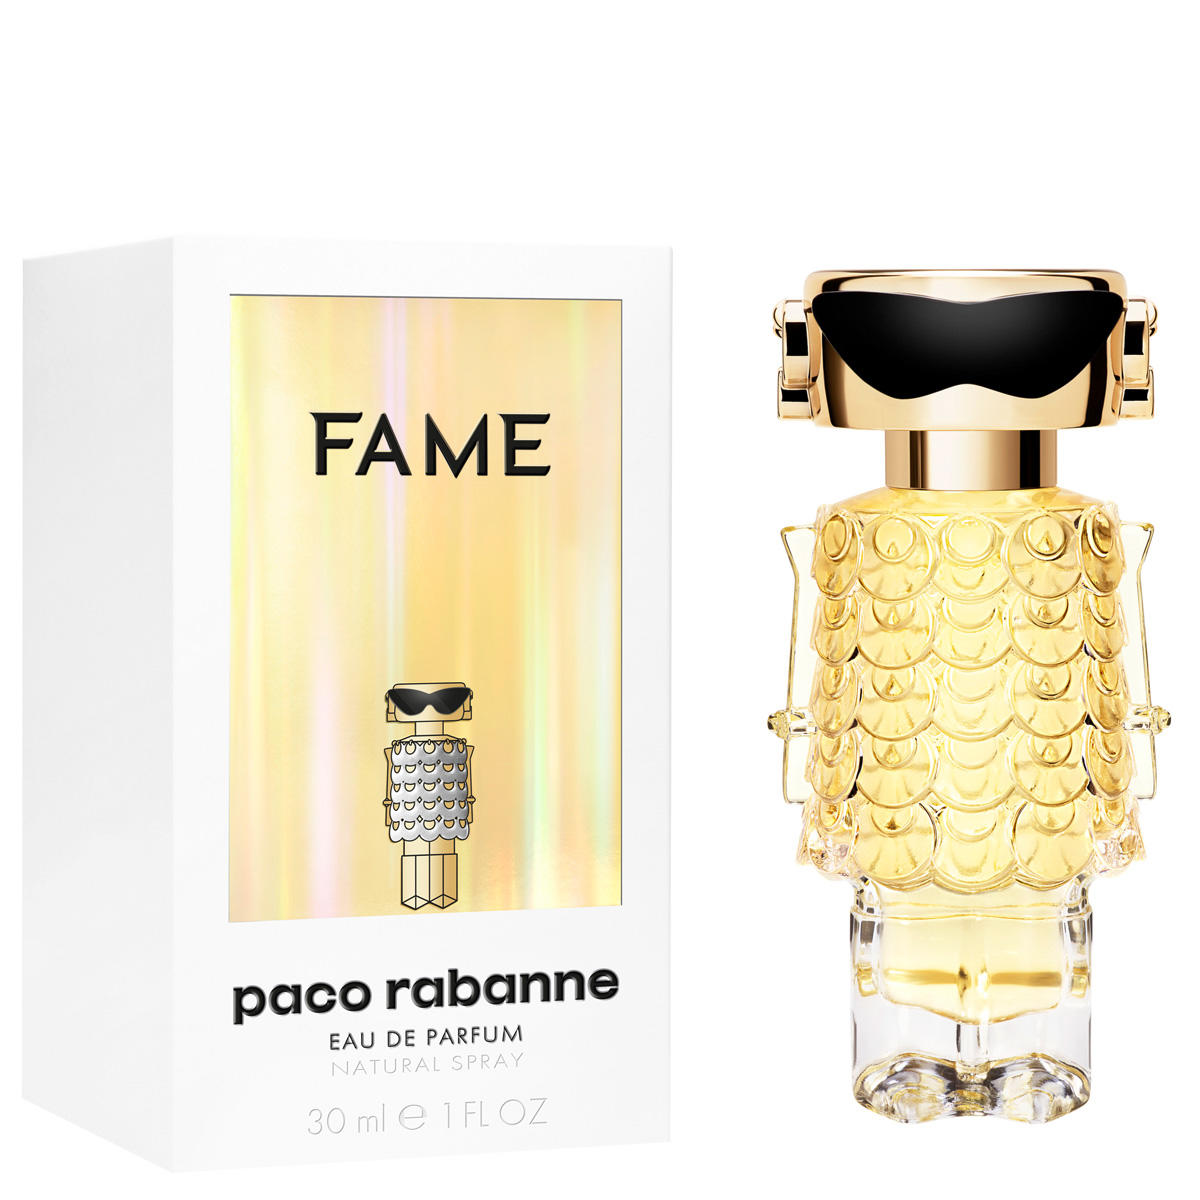 rabanne Fame Eau de Parfum Spray 30 ml - 2